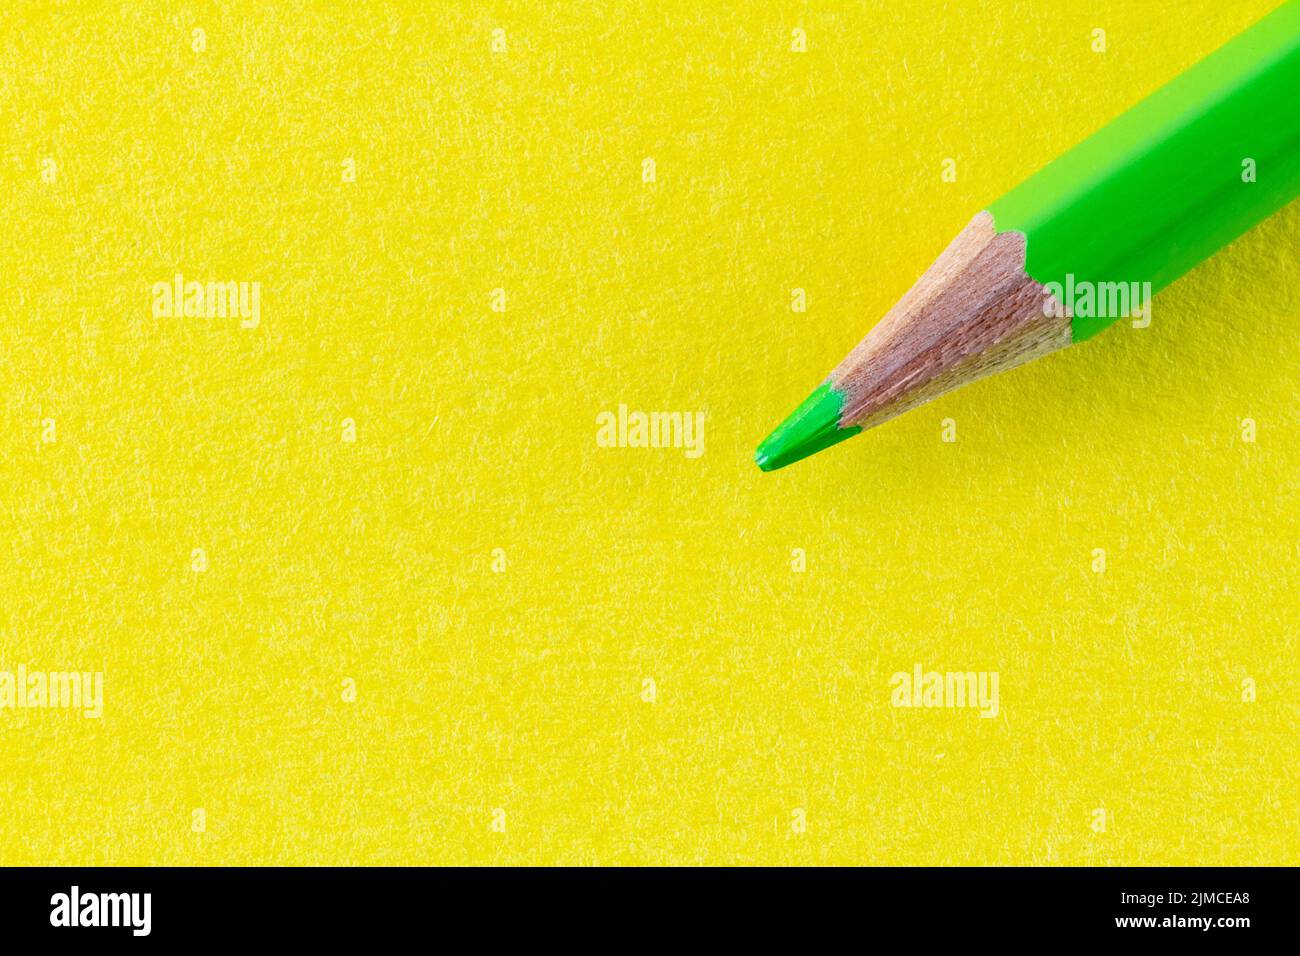 Green color pencil on yellow color paper arranged diagonally. Stock Photo